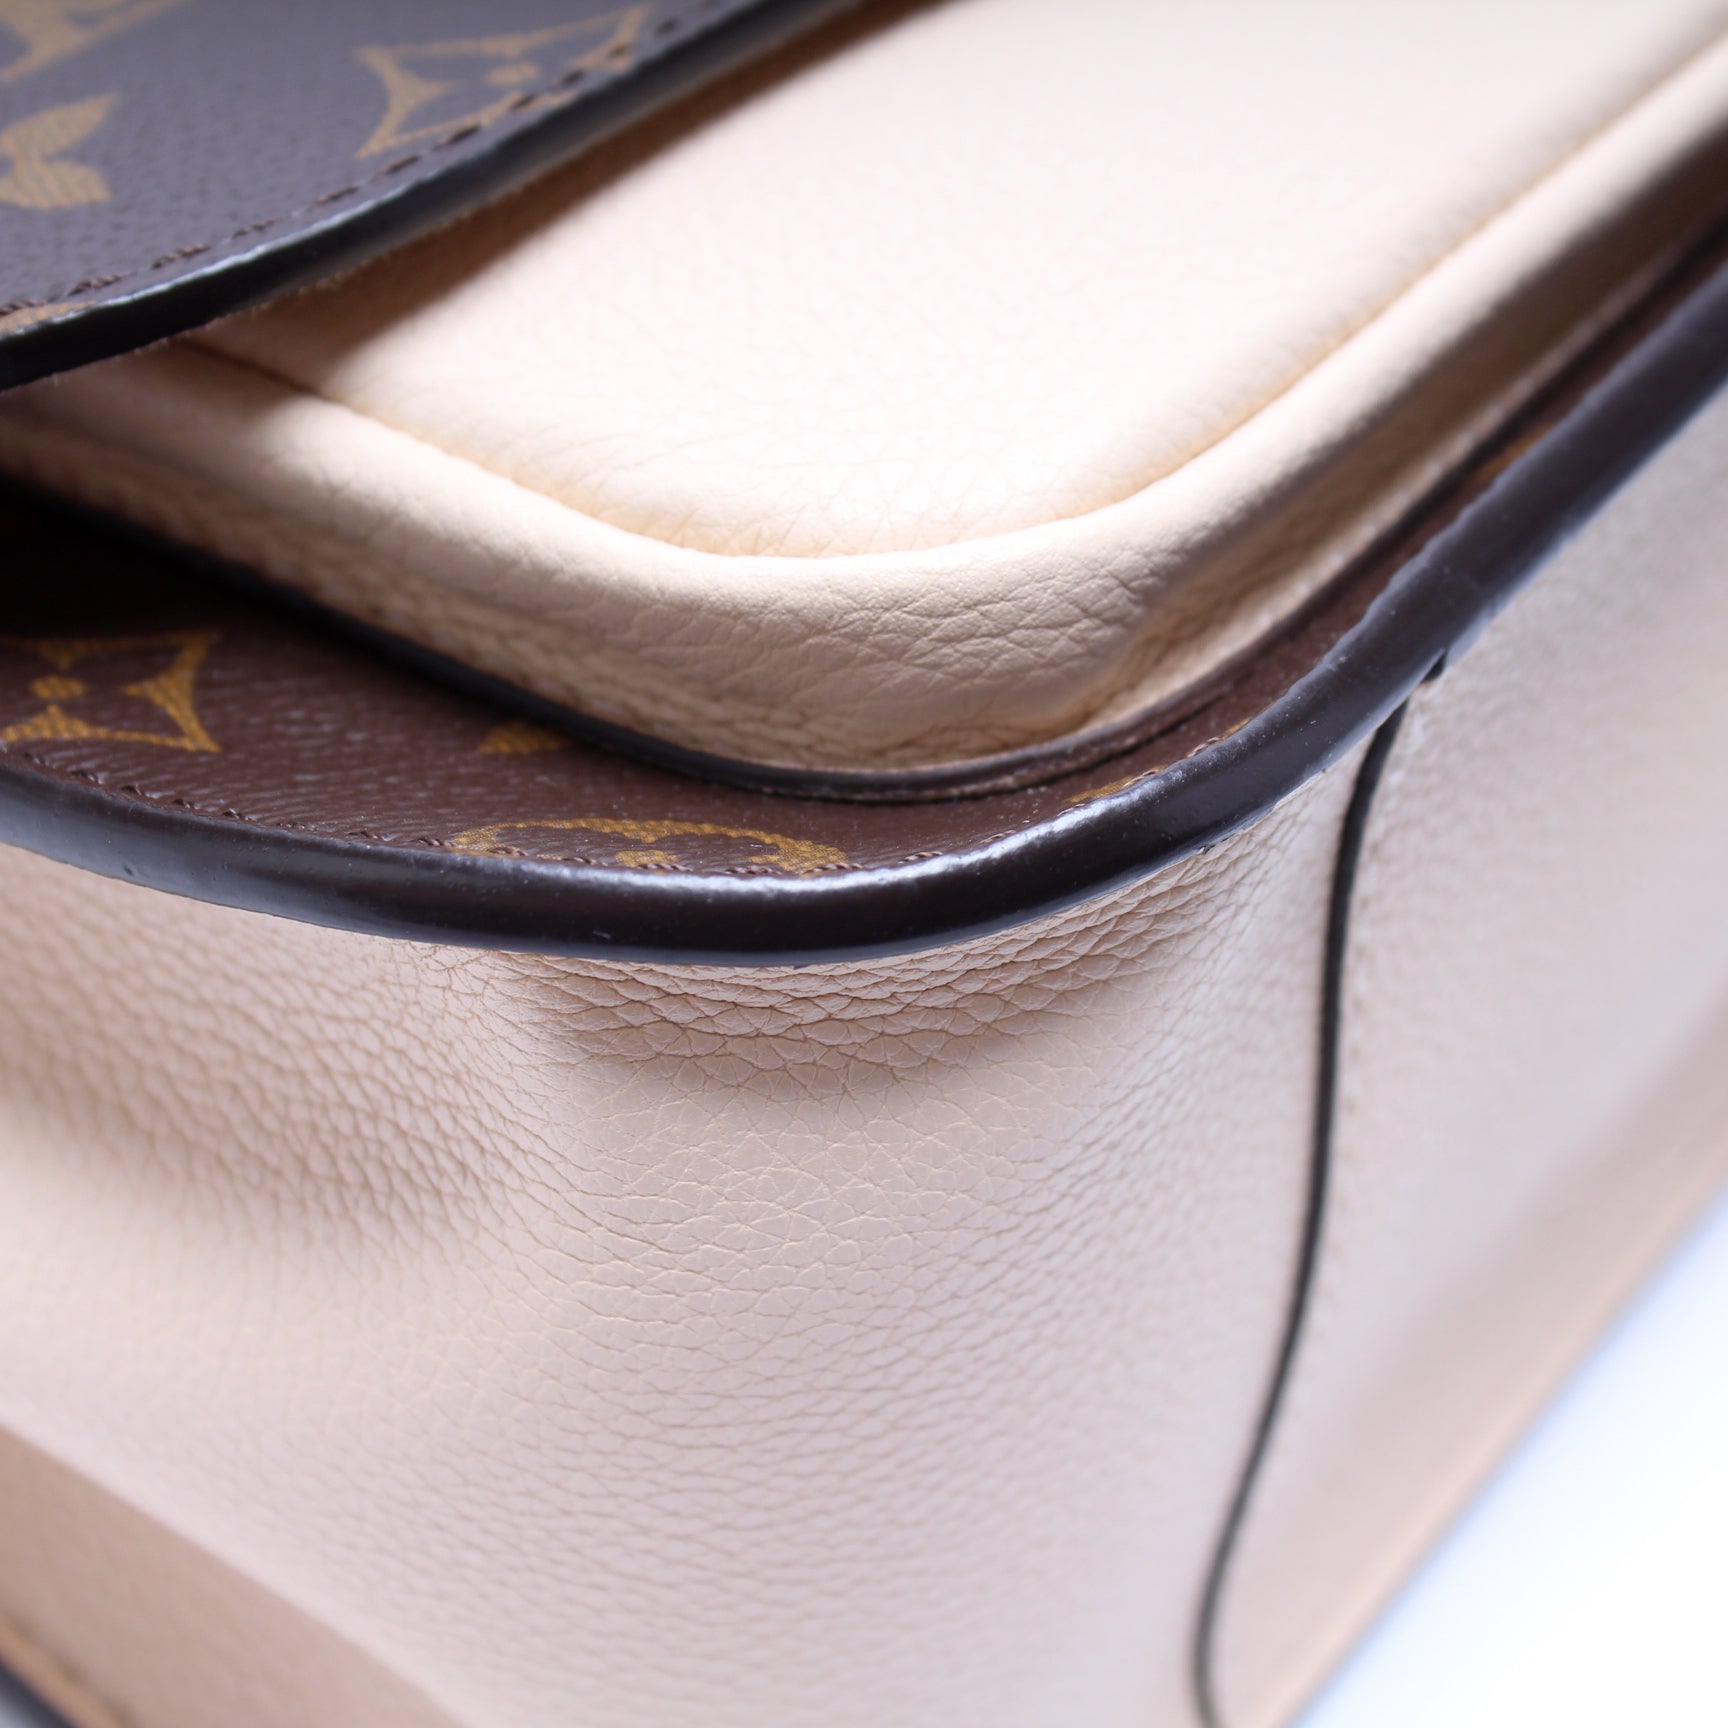 Louis Vuitton Vaugirard Monogram Bag #202-54